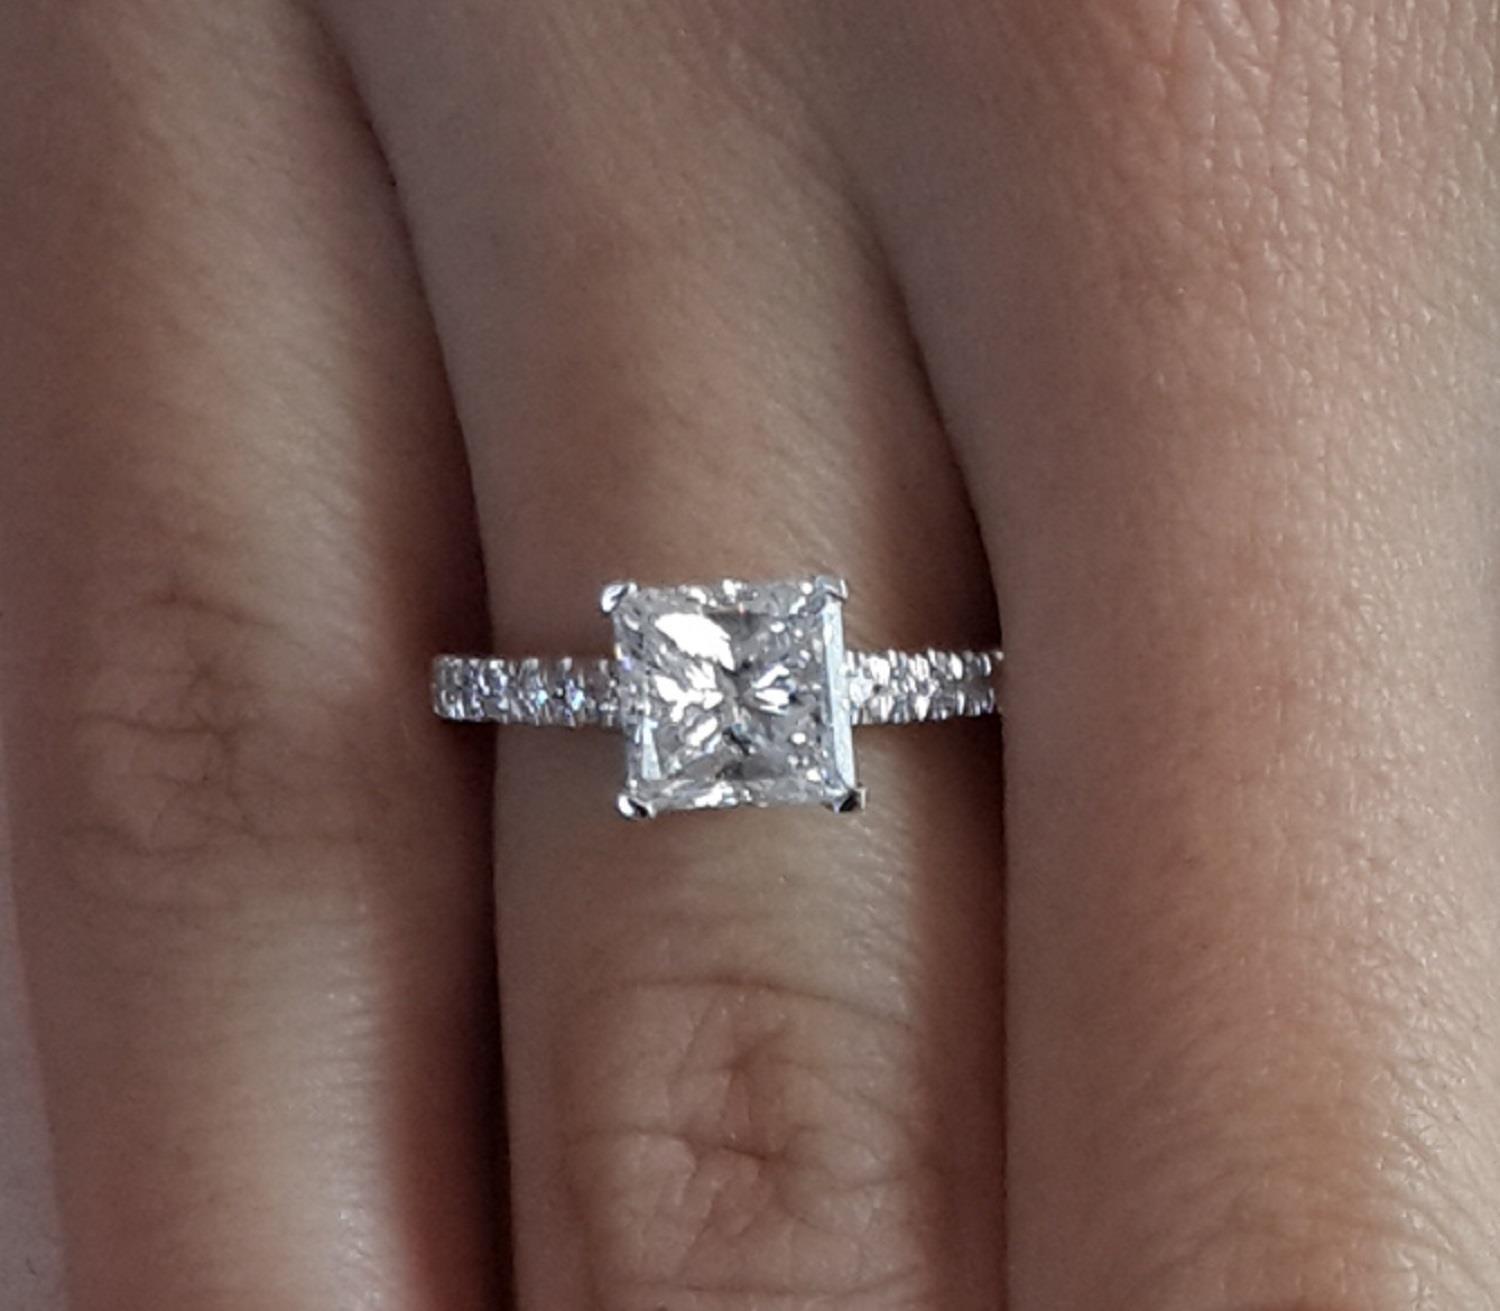 2 Ct Pave 4 prong Princess Cut Diamond Engagement Ring SI1 D White Gold 14k